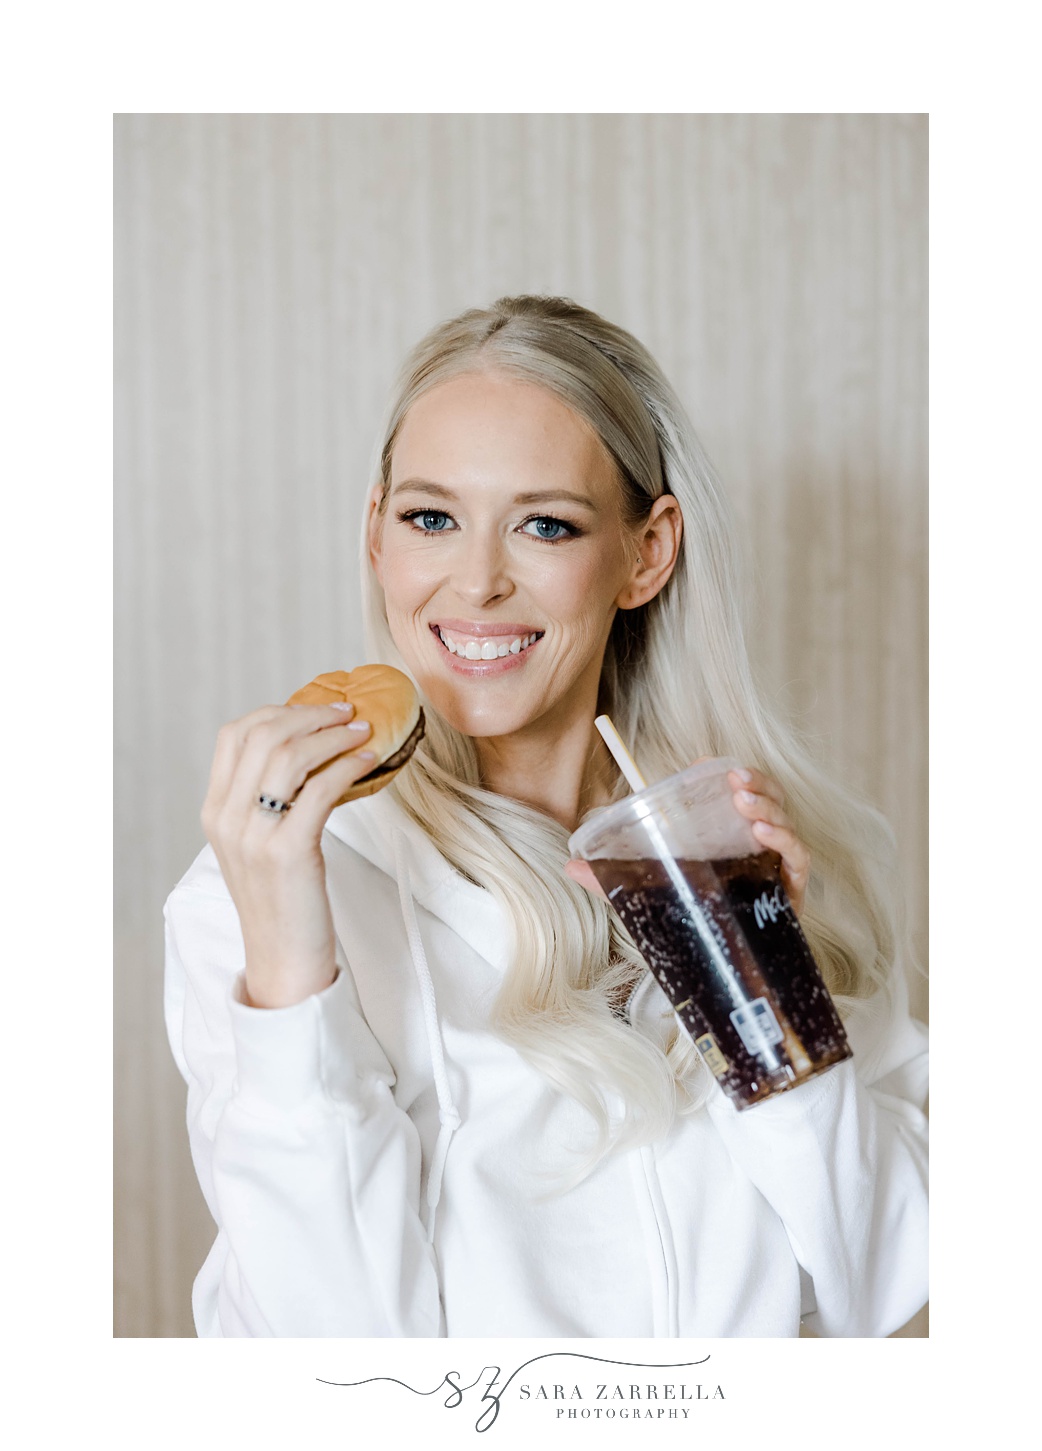 bride eats McDonalds' hamburger and Diet Coke on wedding day